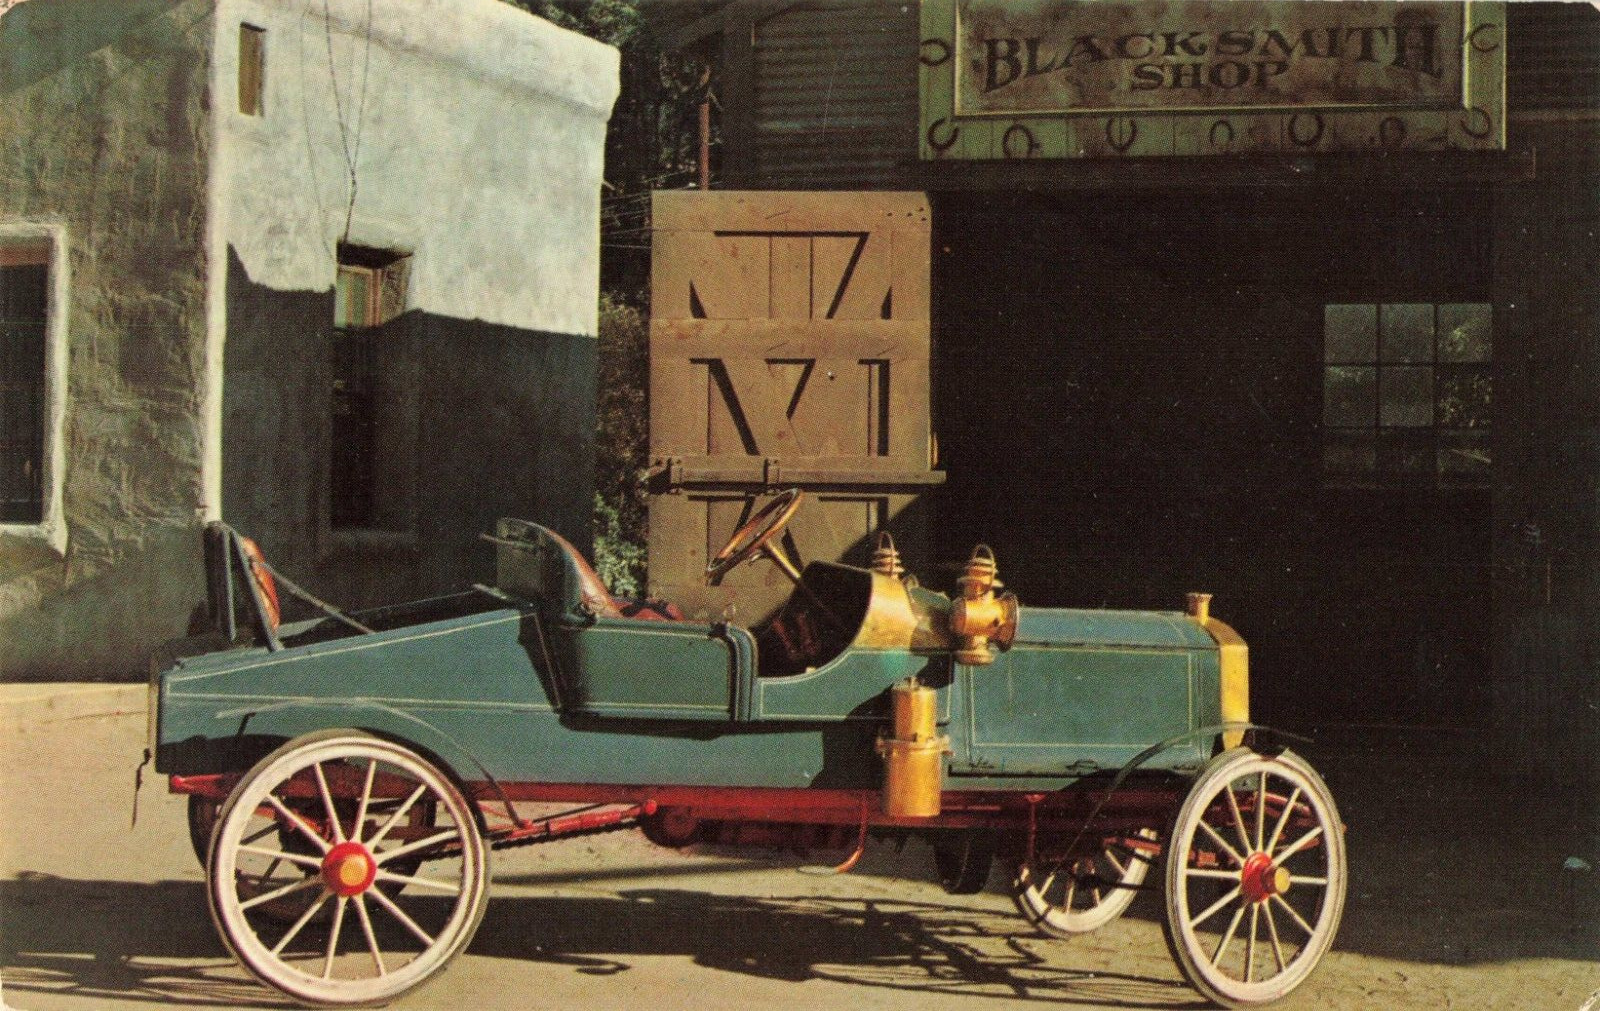 Oil City PA, 1903 Mitchell, Weaver Chevrolet Service Reminder, Vintage Postcard